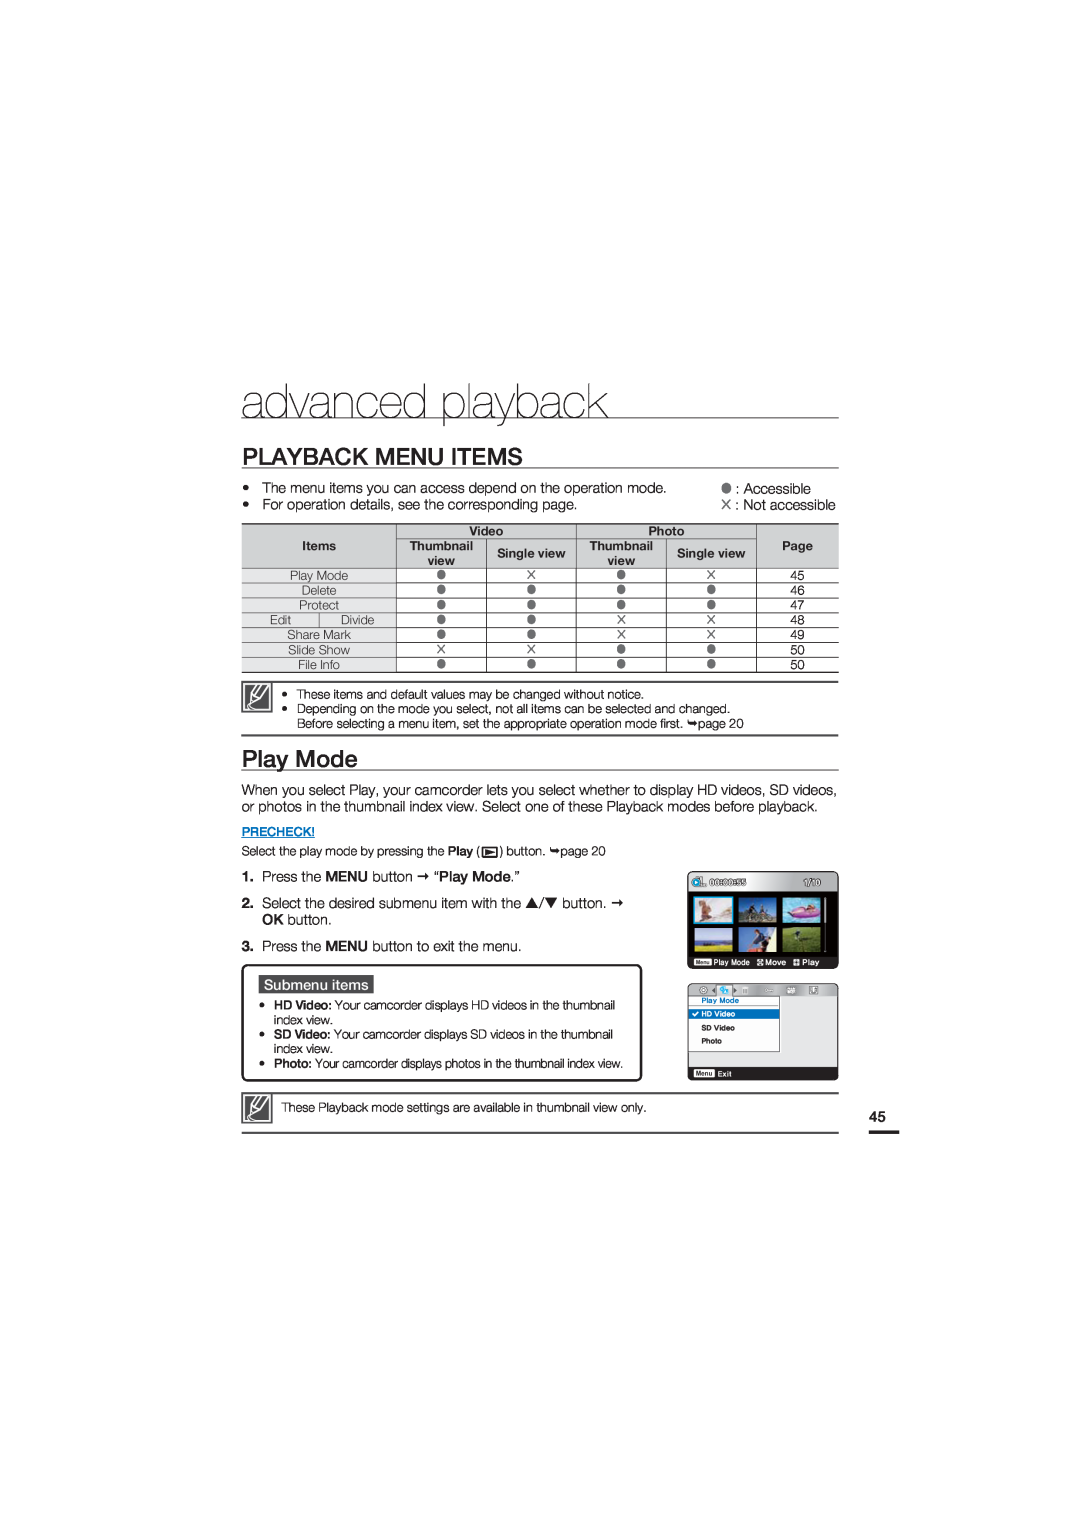 Samsung HMX-U20SP/EDC advanced playback, Playback Menu Items, Play Mode, Submenu items, Video, Photo, Page, view, Precheck 